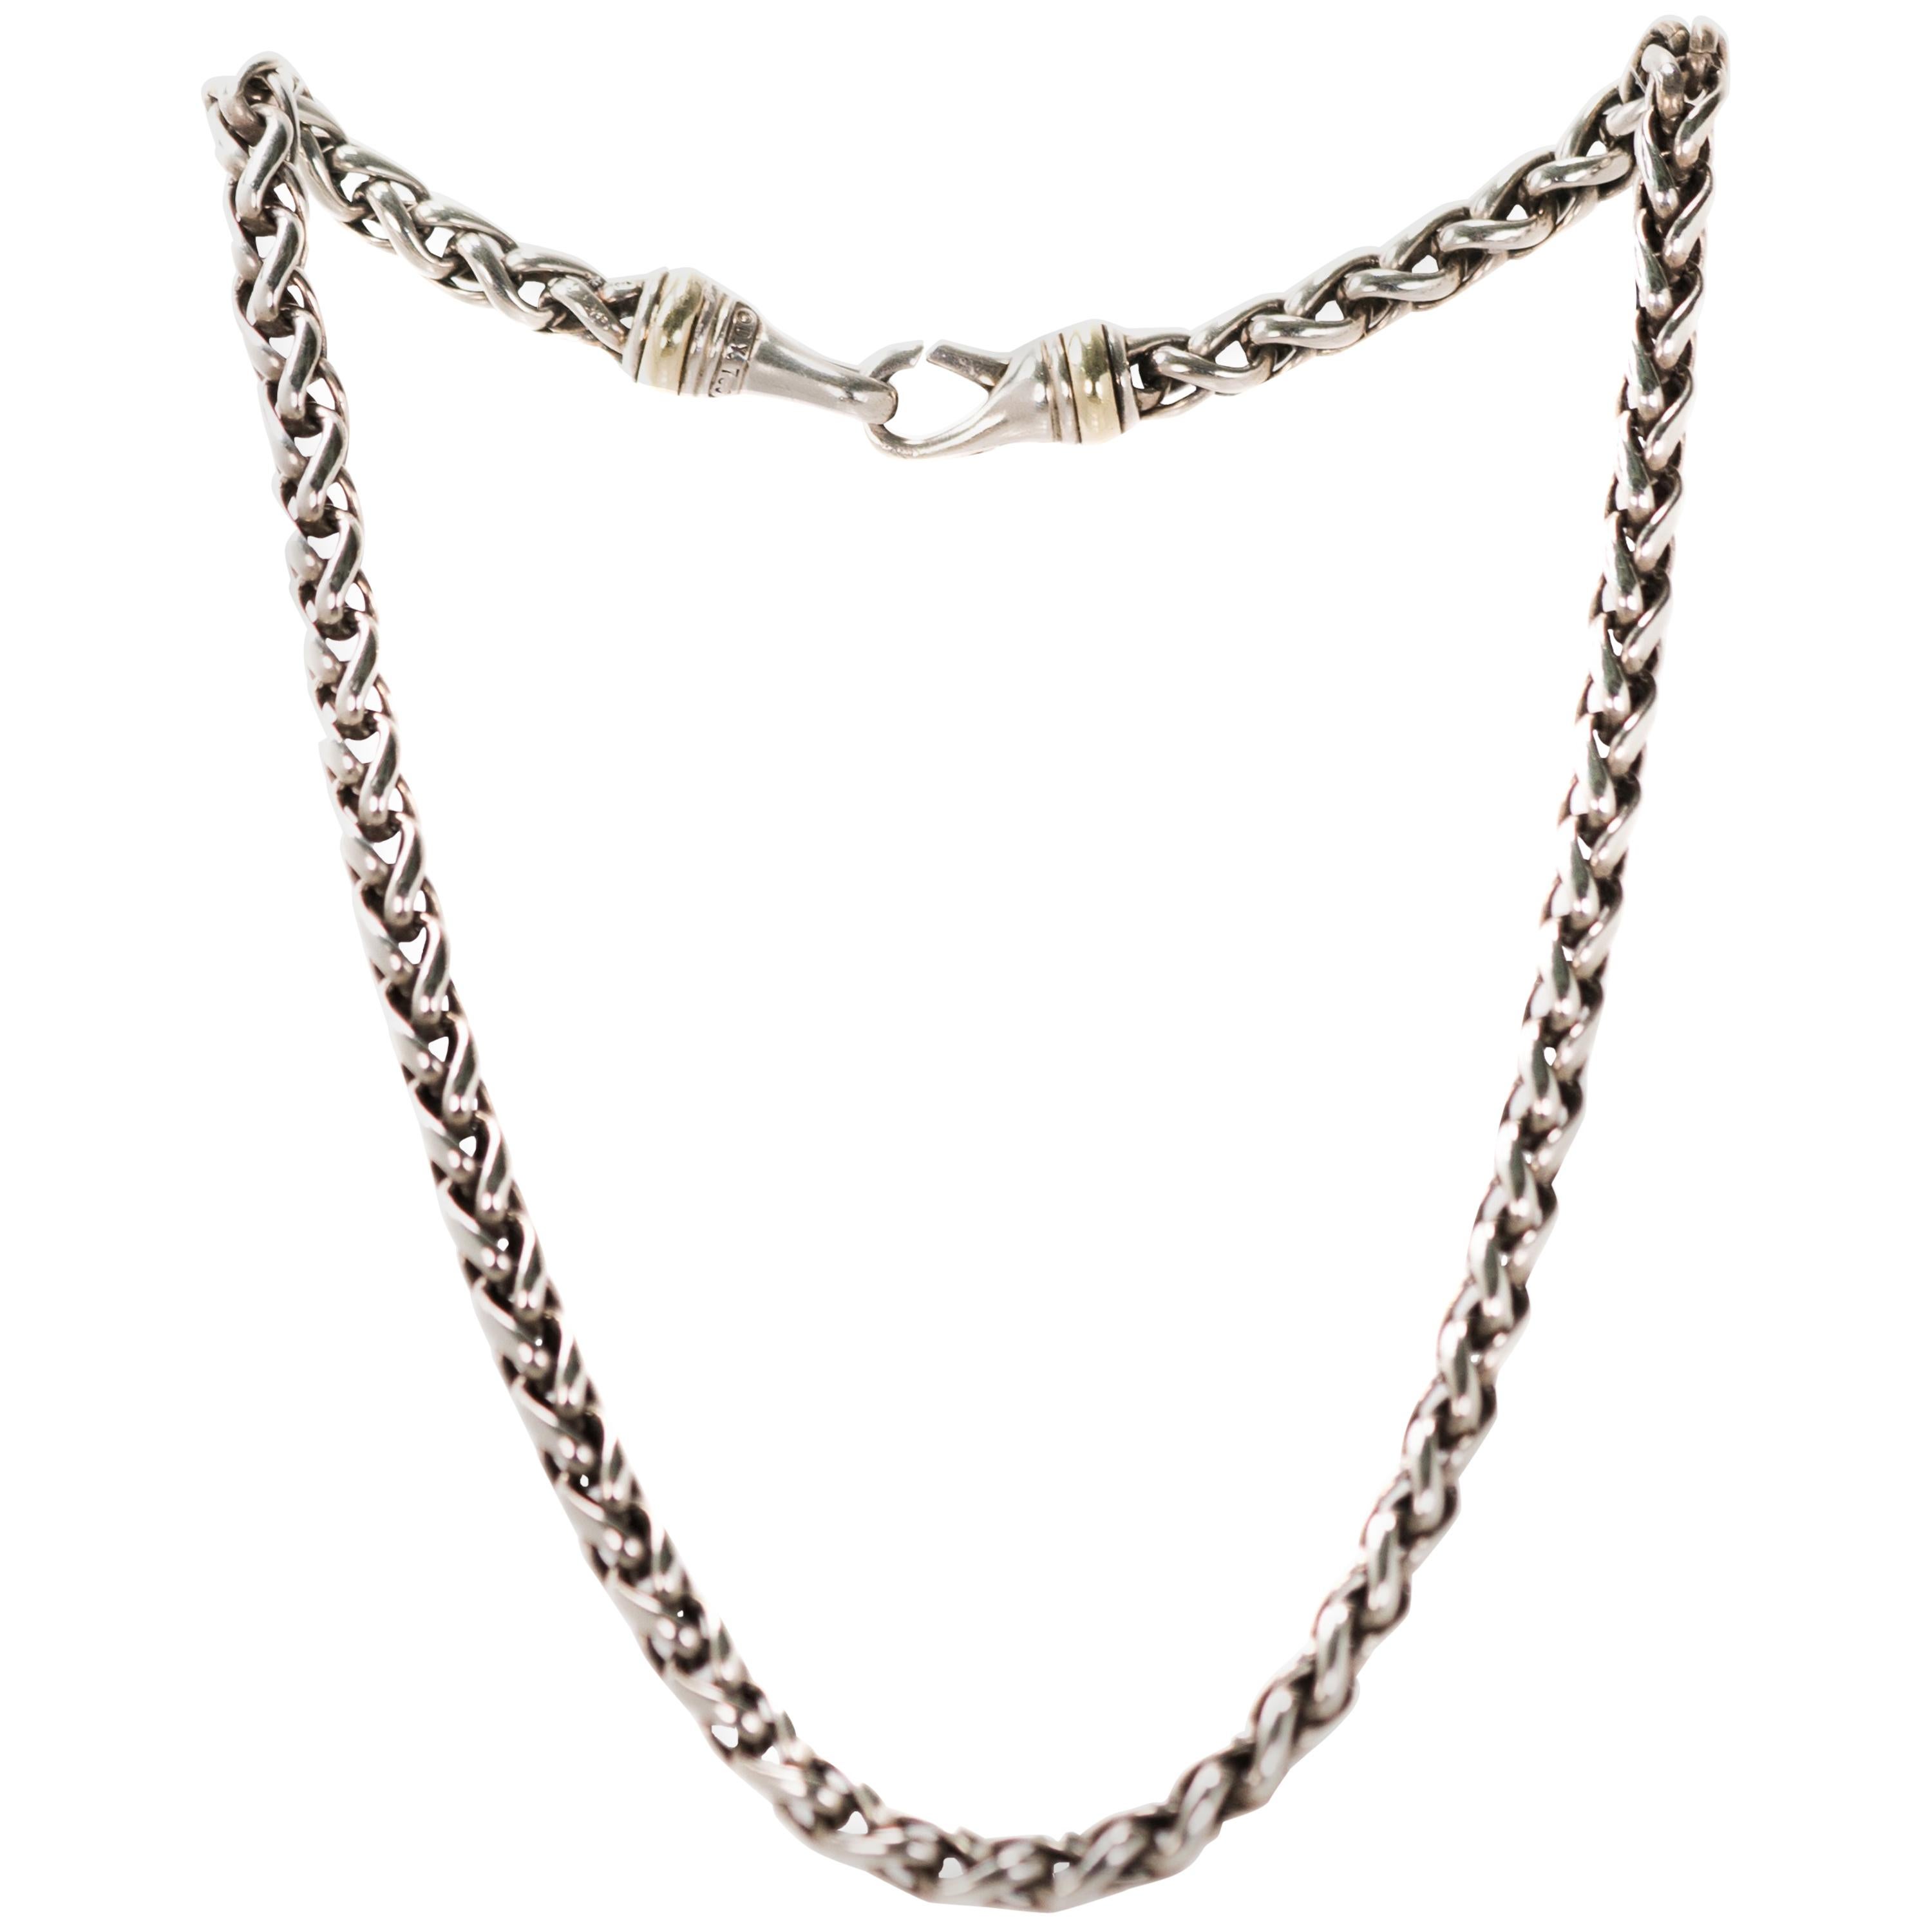 David Yurman Wheat Chain Choker Necklace in Sterling Silver and 14 Karat Gold